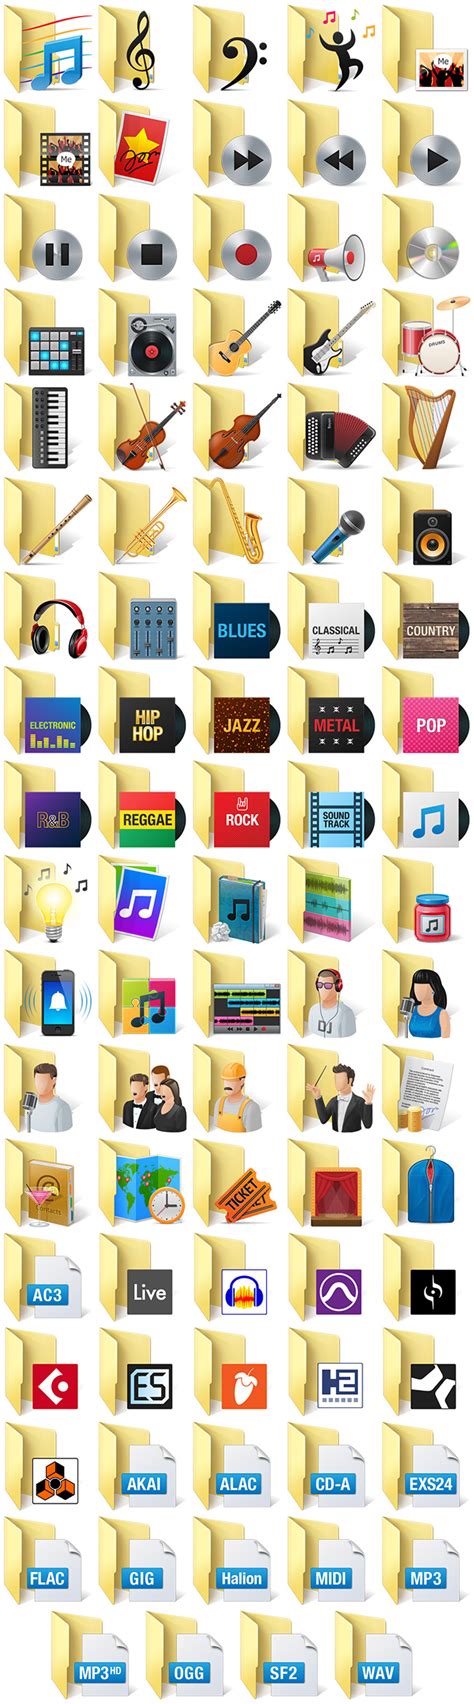 Music Folder Icons 89 Folder Icons With Music Symbols To Organize